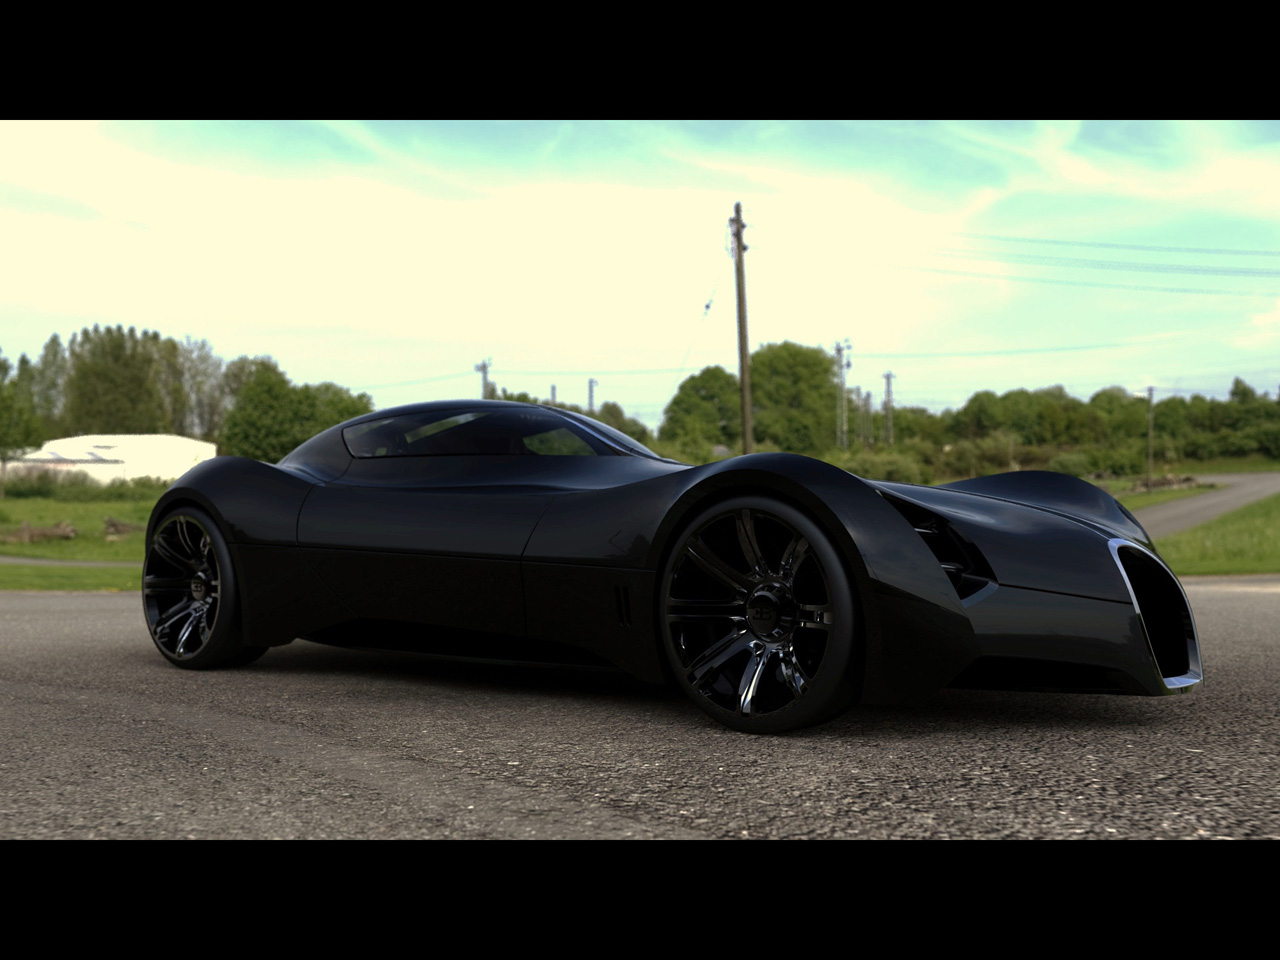 2025 Bugatti Aerolithe Concept by Douglas Hogg